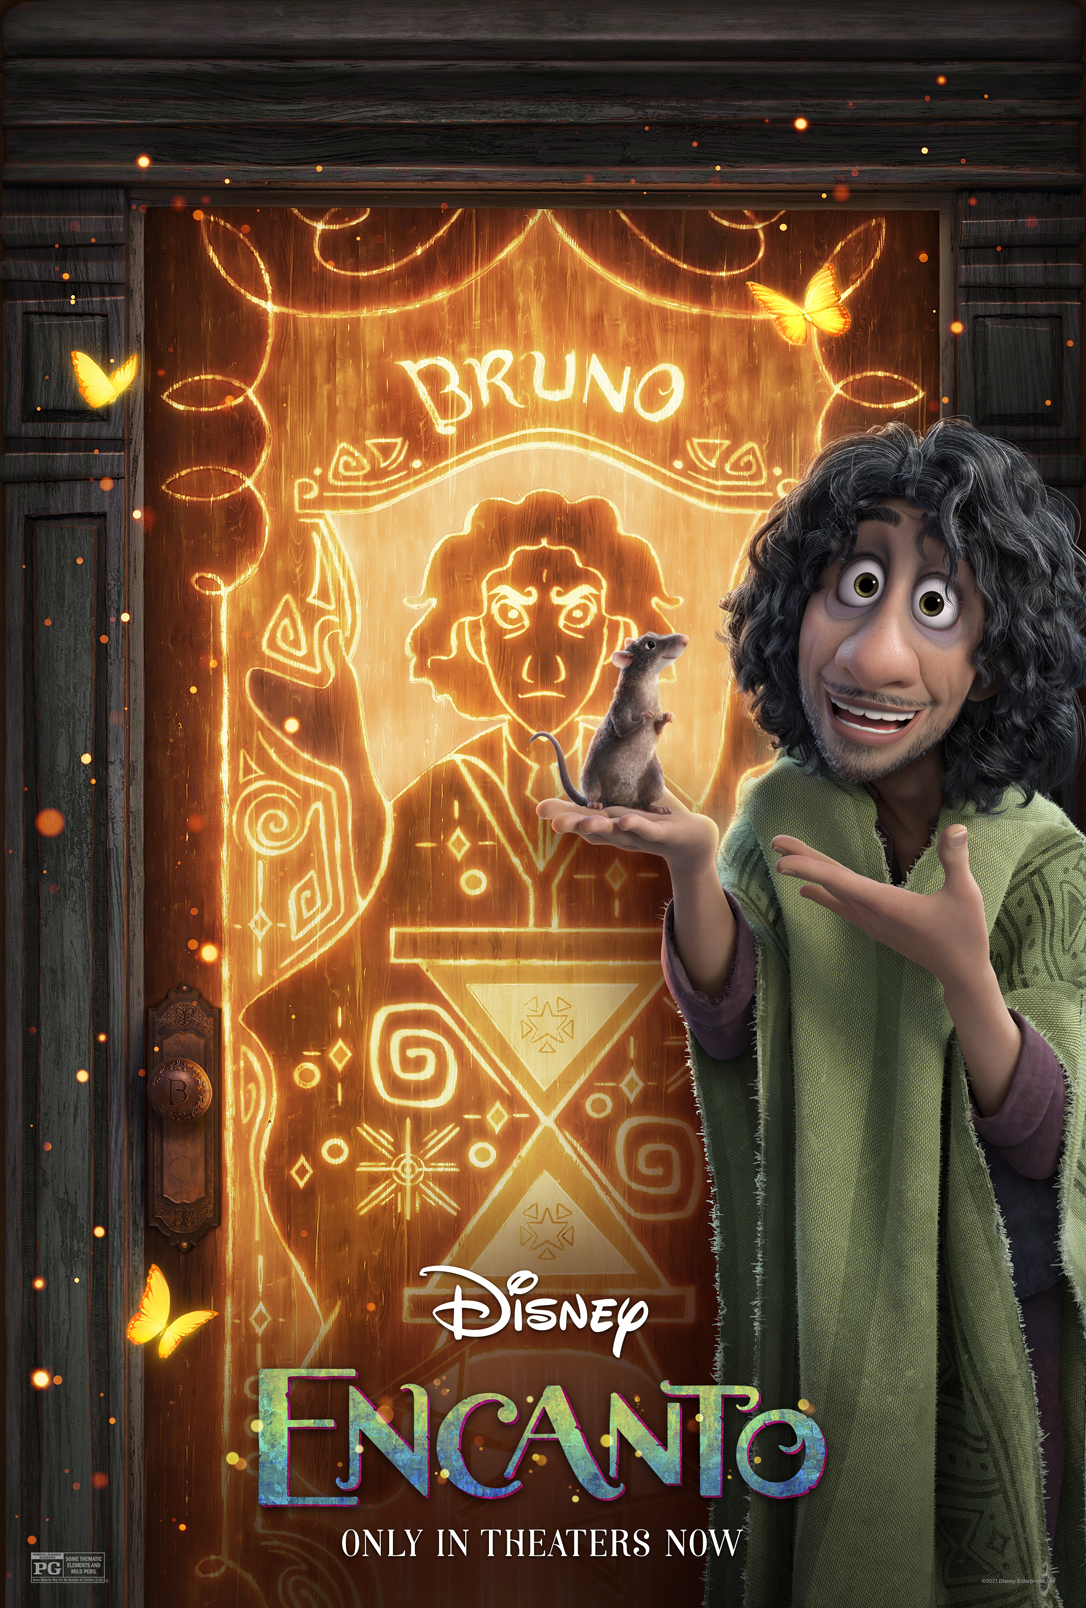 Disney Animation's talk about Bruno